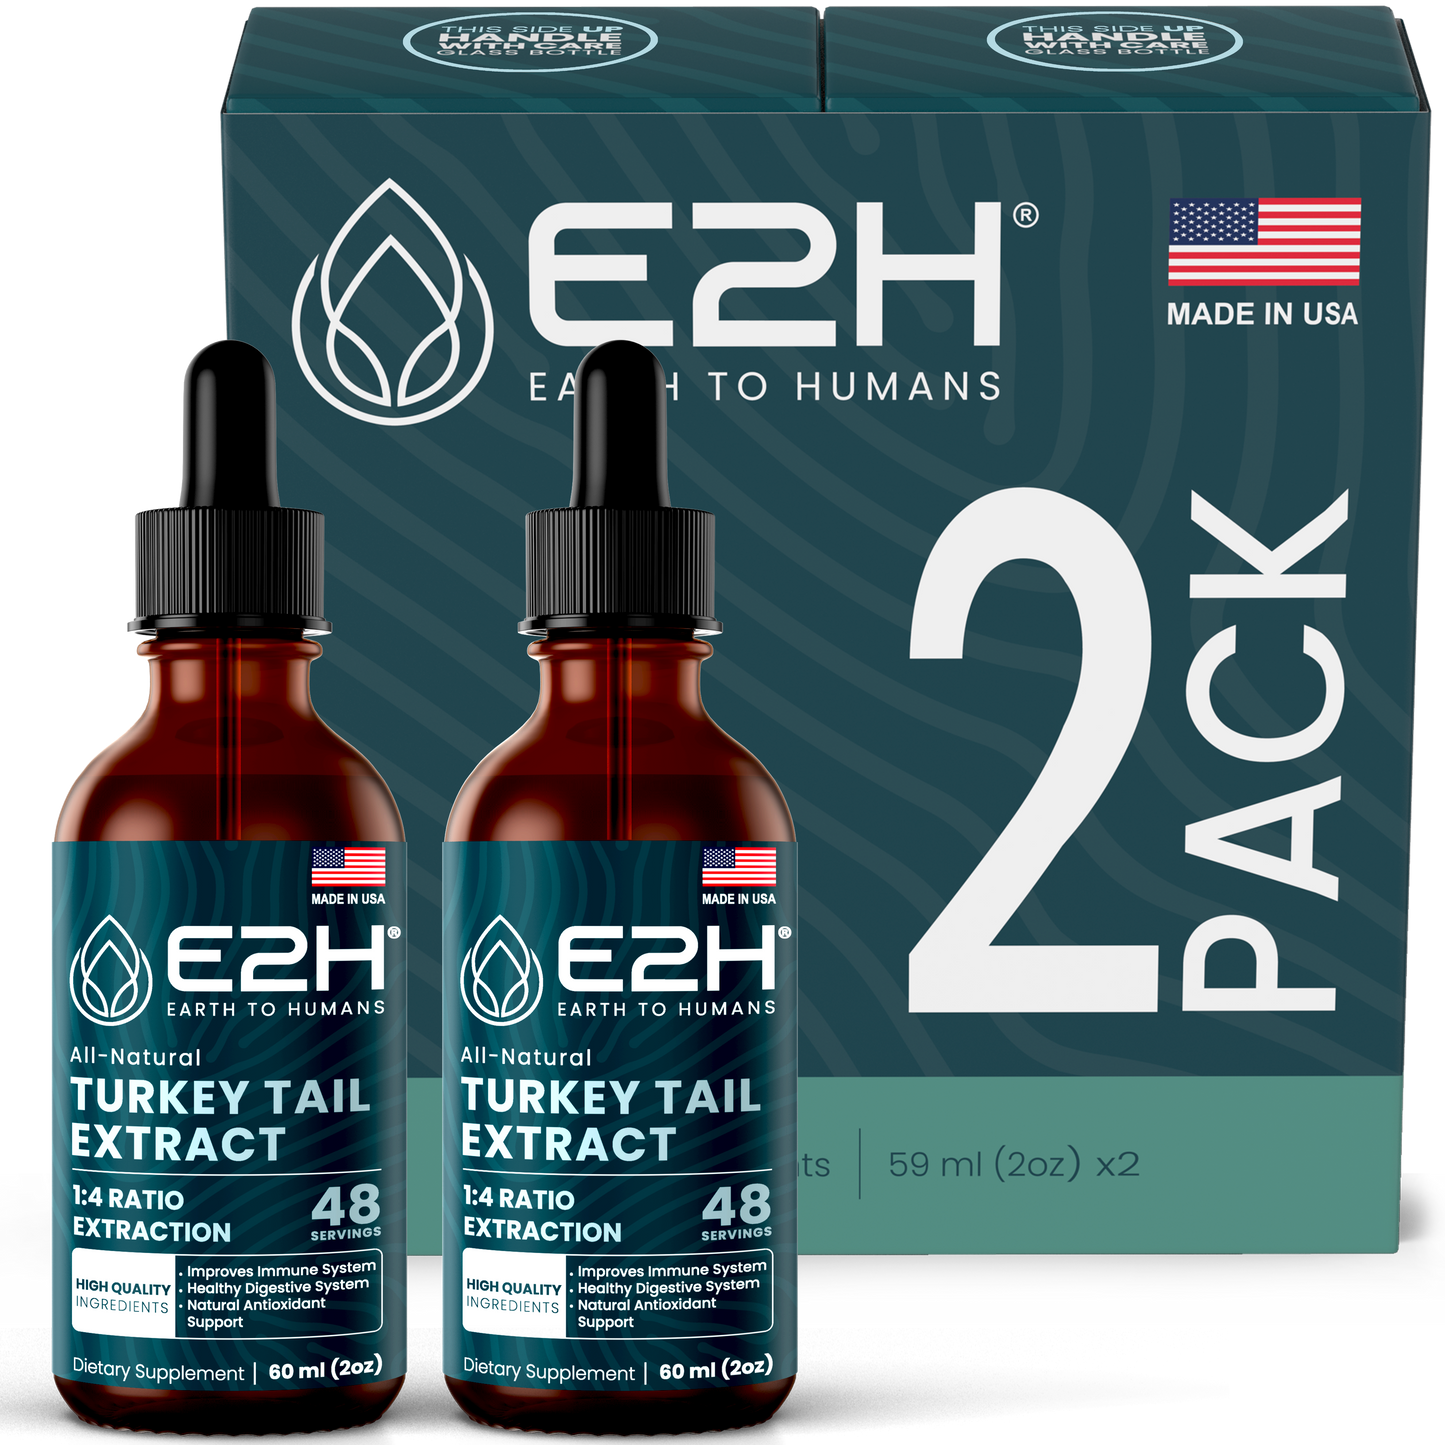 
                  
                    All-Natural TURKEY TAIL MUSHROOM Liquid Extract - E2H
                  
                